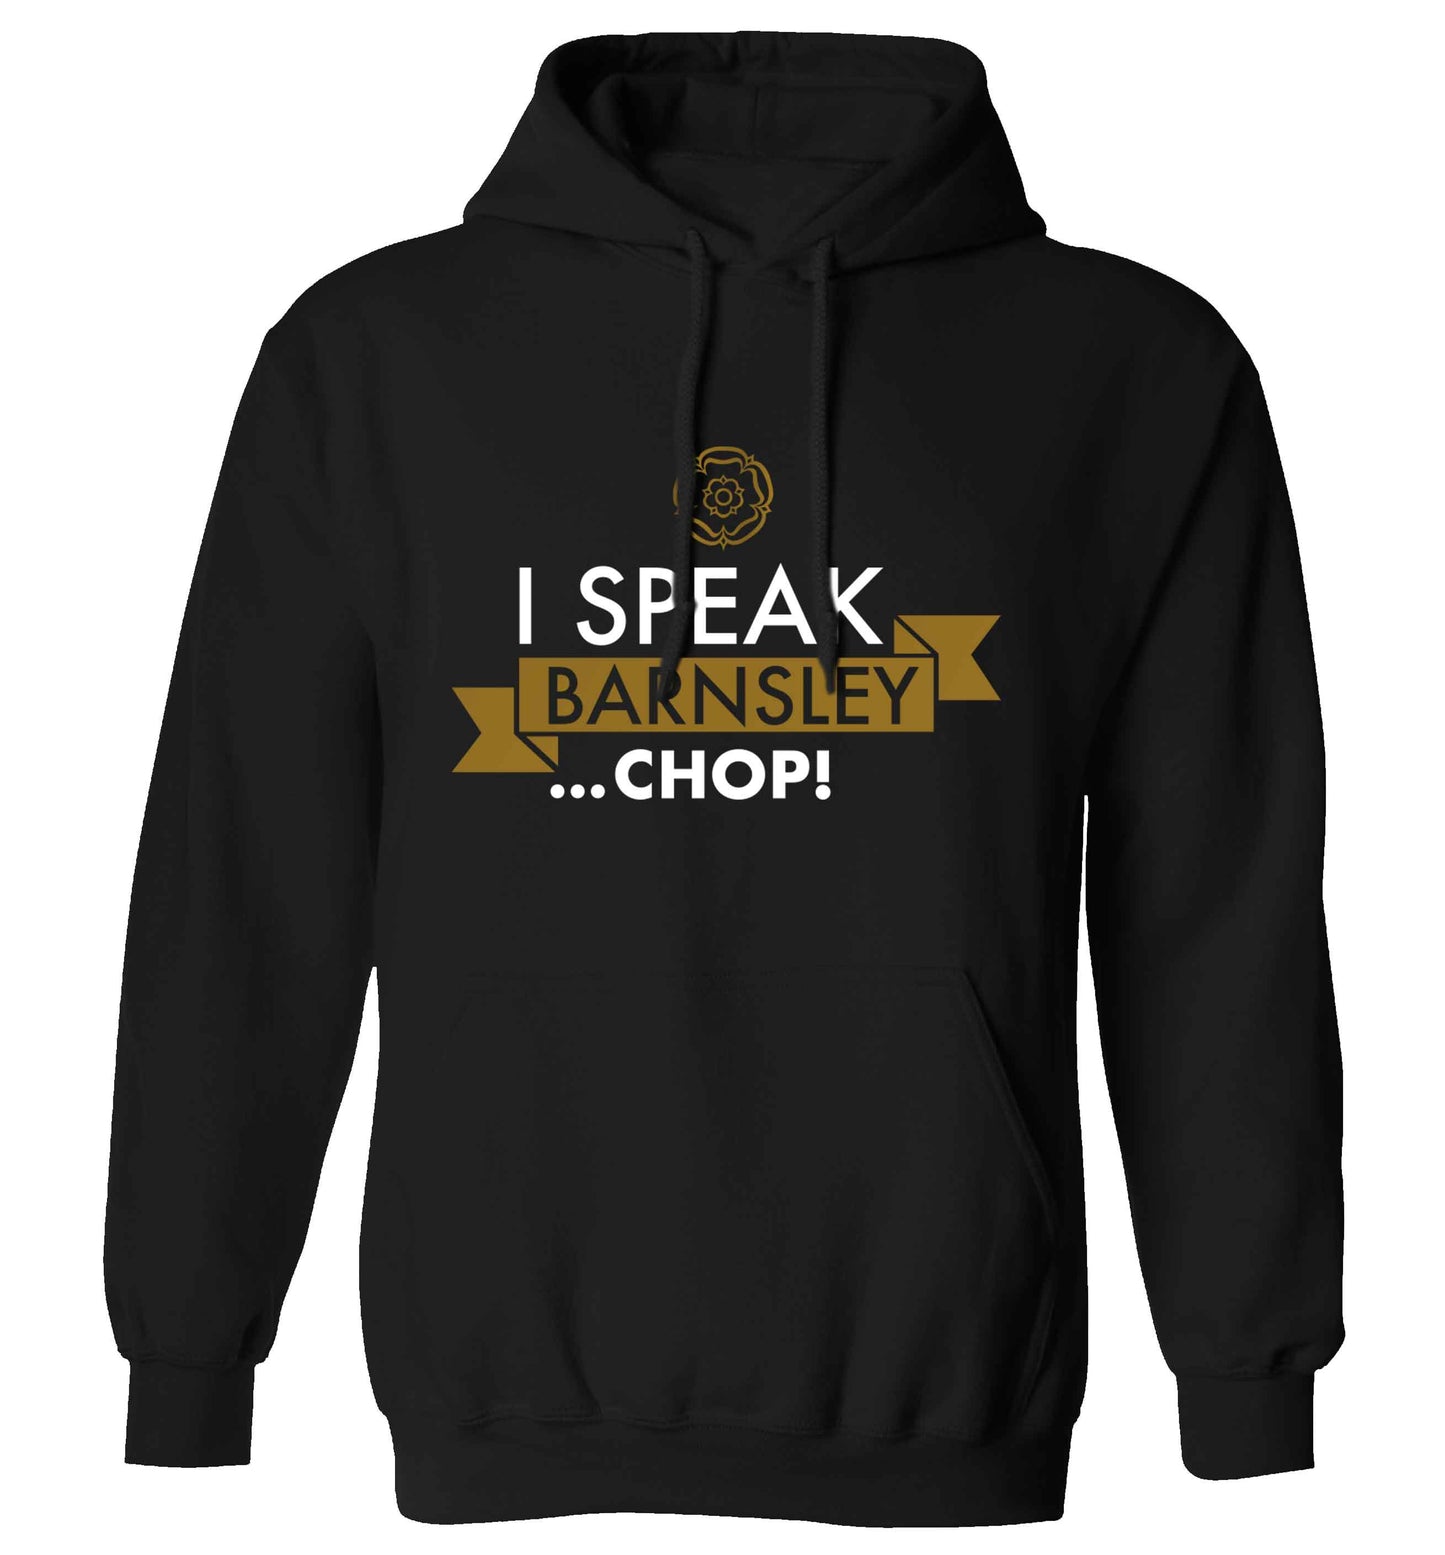 I speak Barnsley...chop! adults unisex black hoodie 2XL